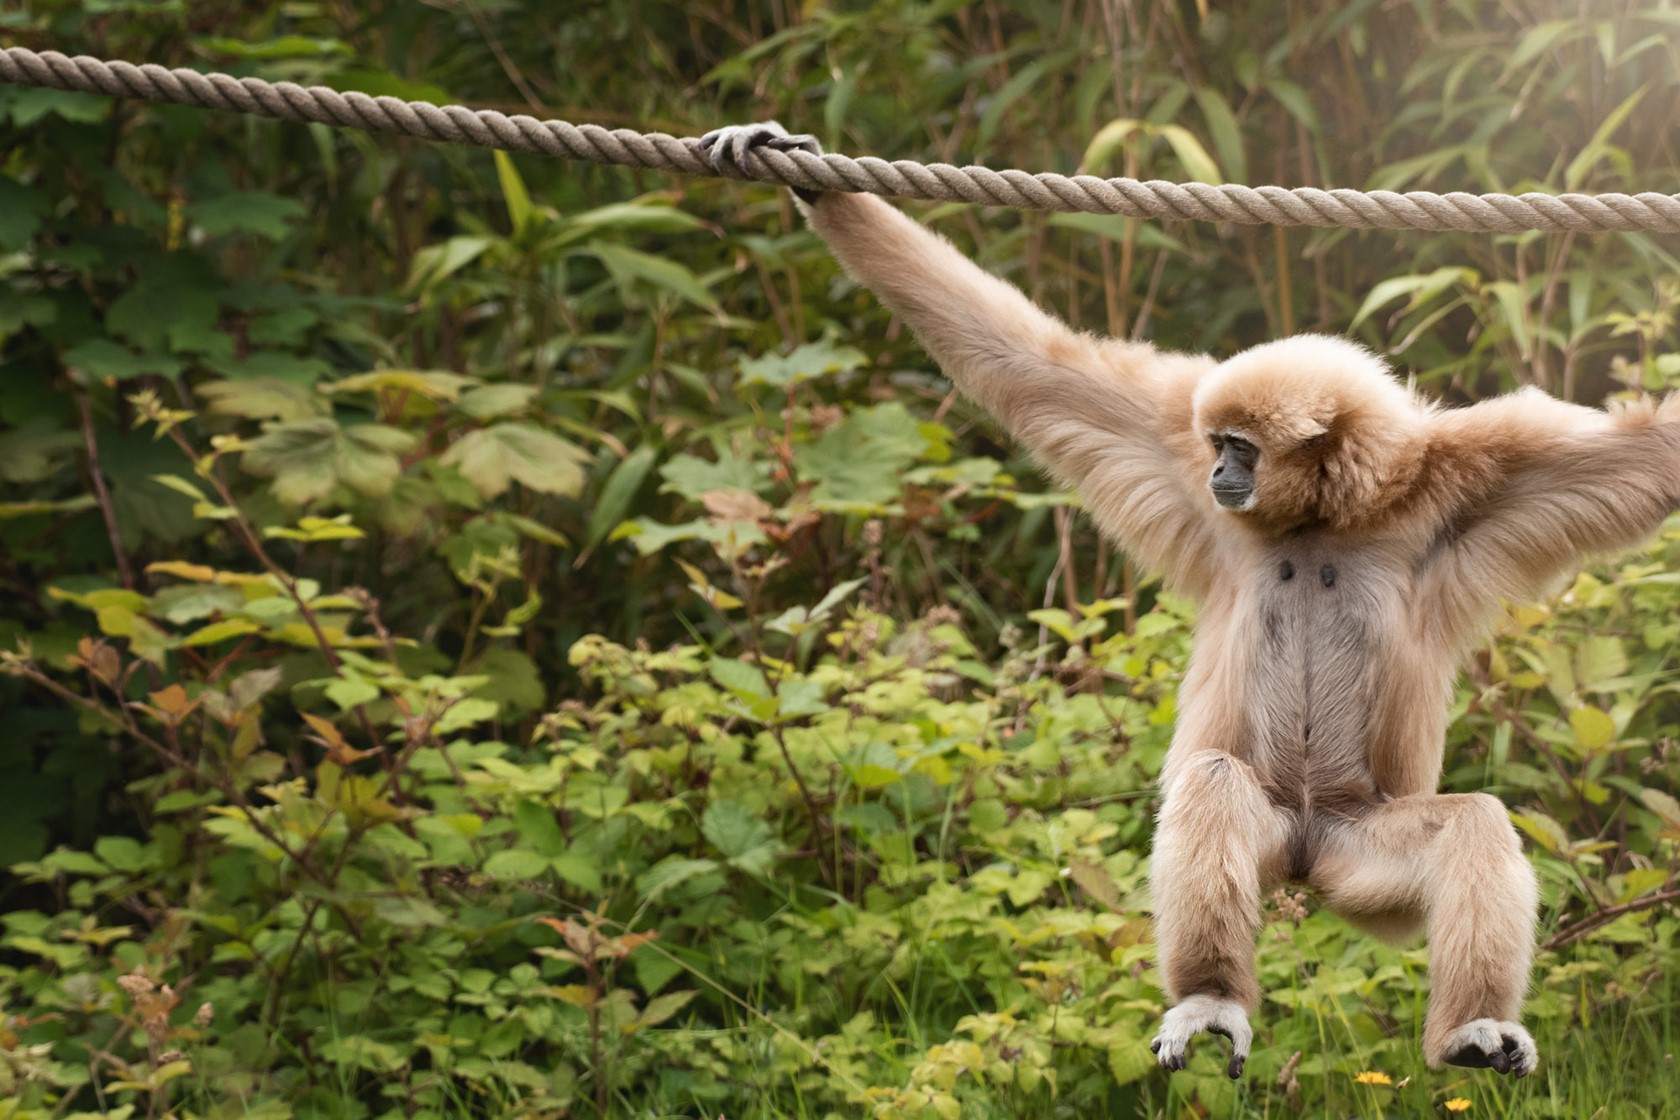 Lar Gibbon swings across rope